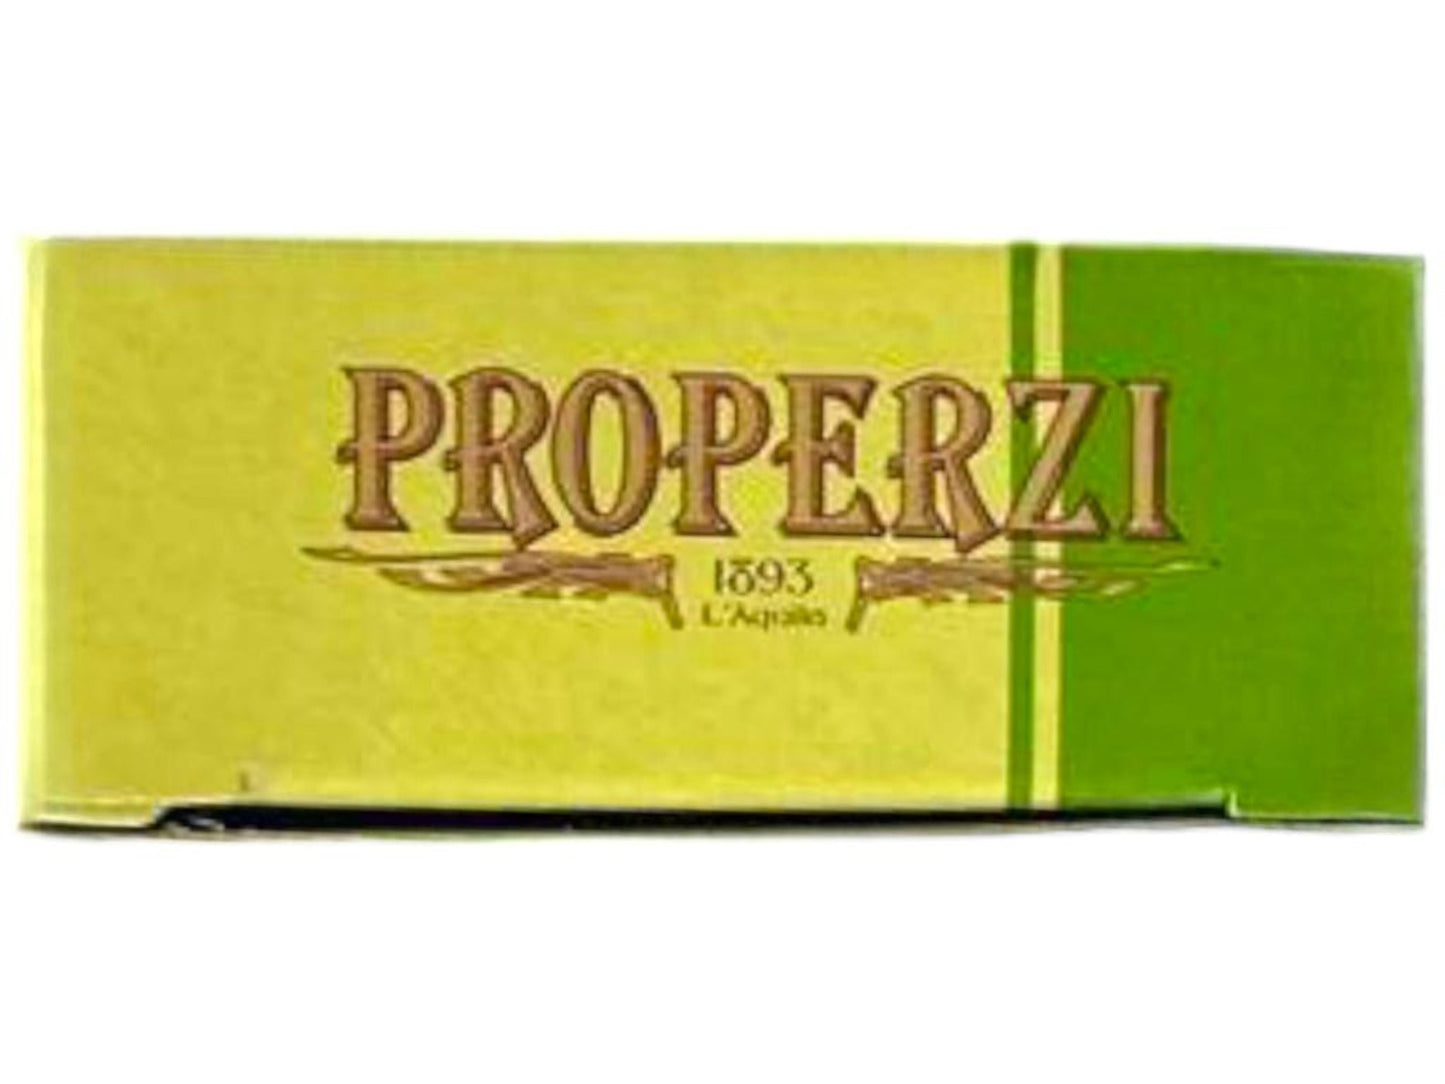 Properzi Italian Soft Nougat Candy With Almonds and Lemon 200g